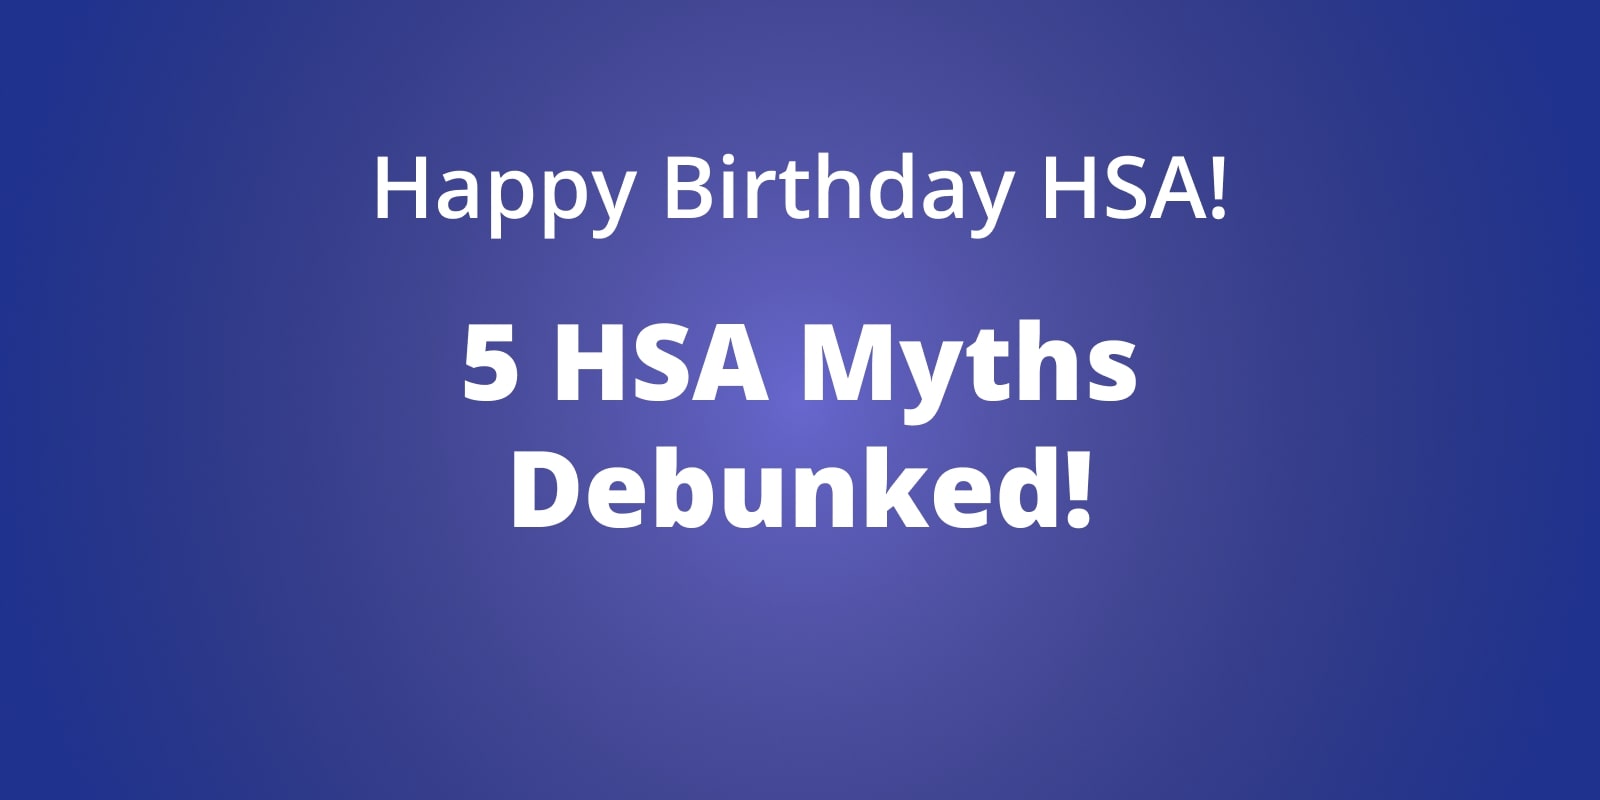 Happy Birthday HSA! 5 HSA Myths Debunked